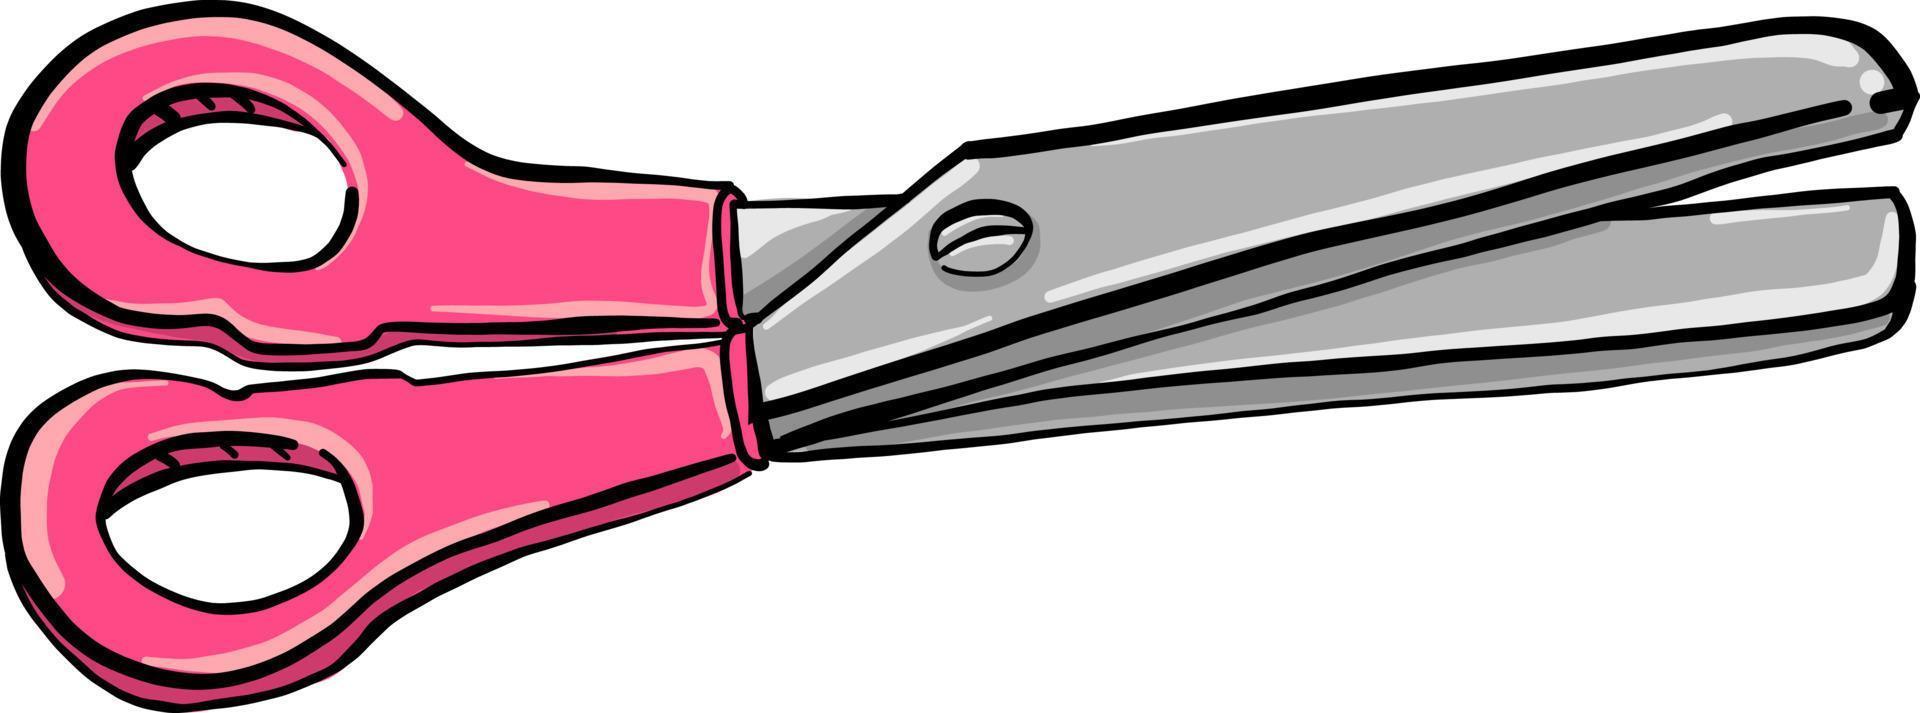 Pink scissors, illustration, vector on white background